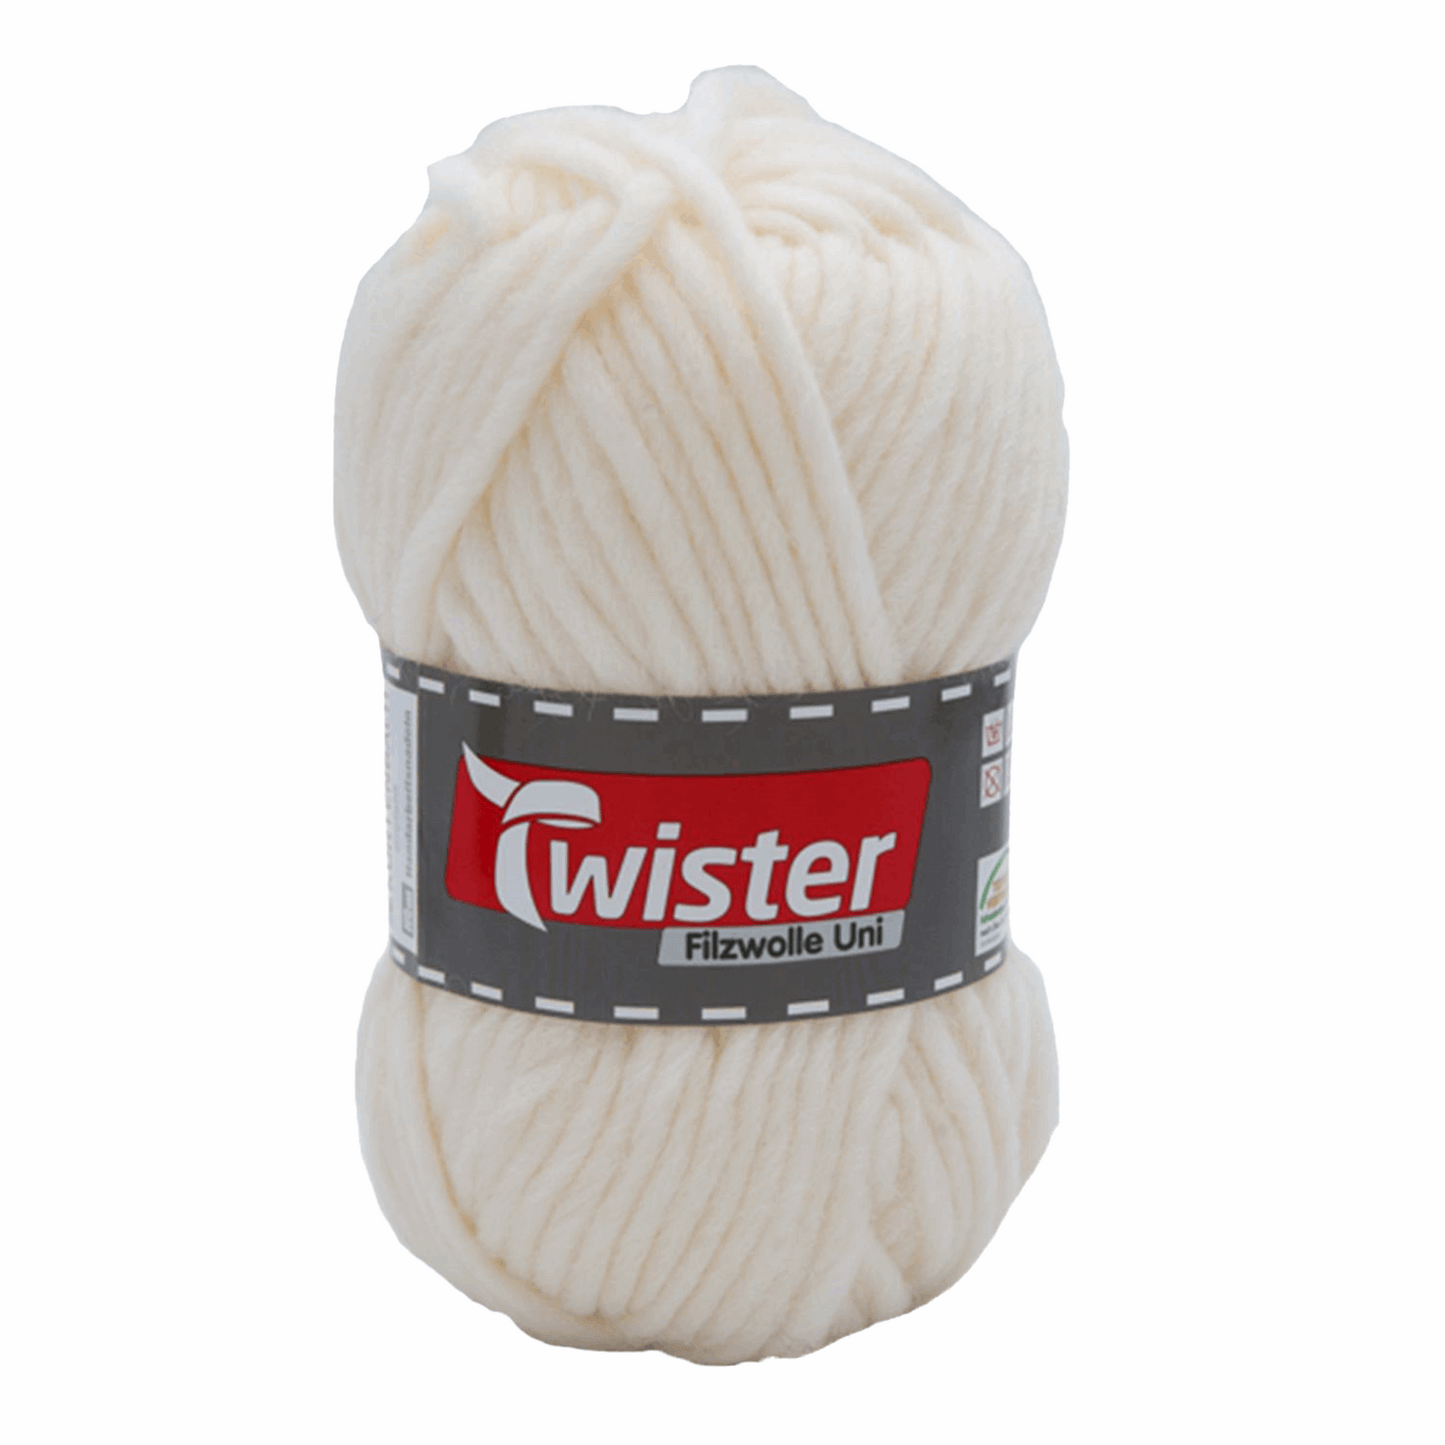 Twister Filzwolle 50G, 98535, Farbe weiß 10